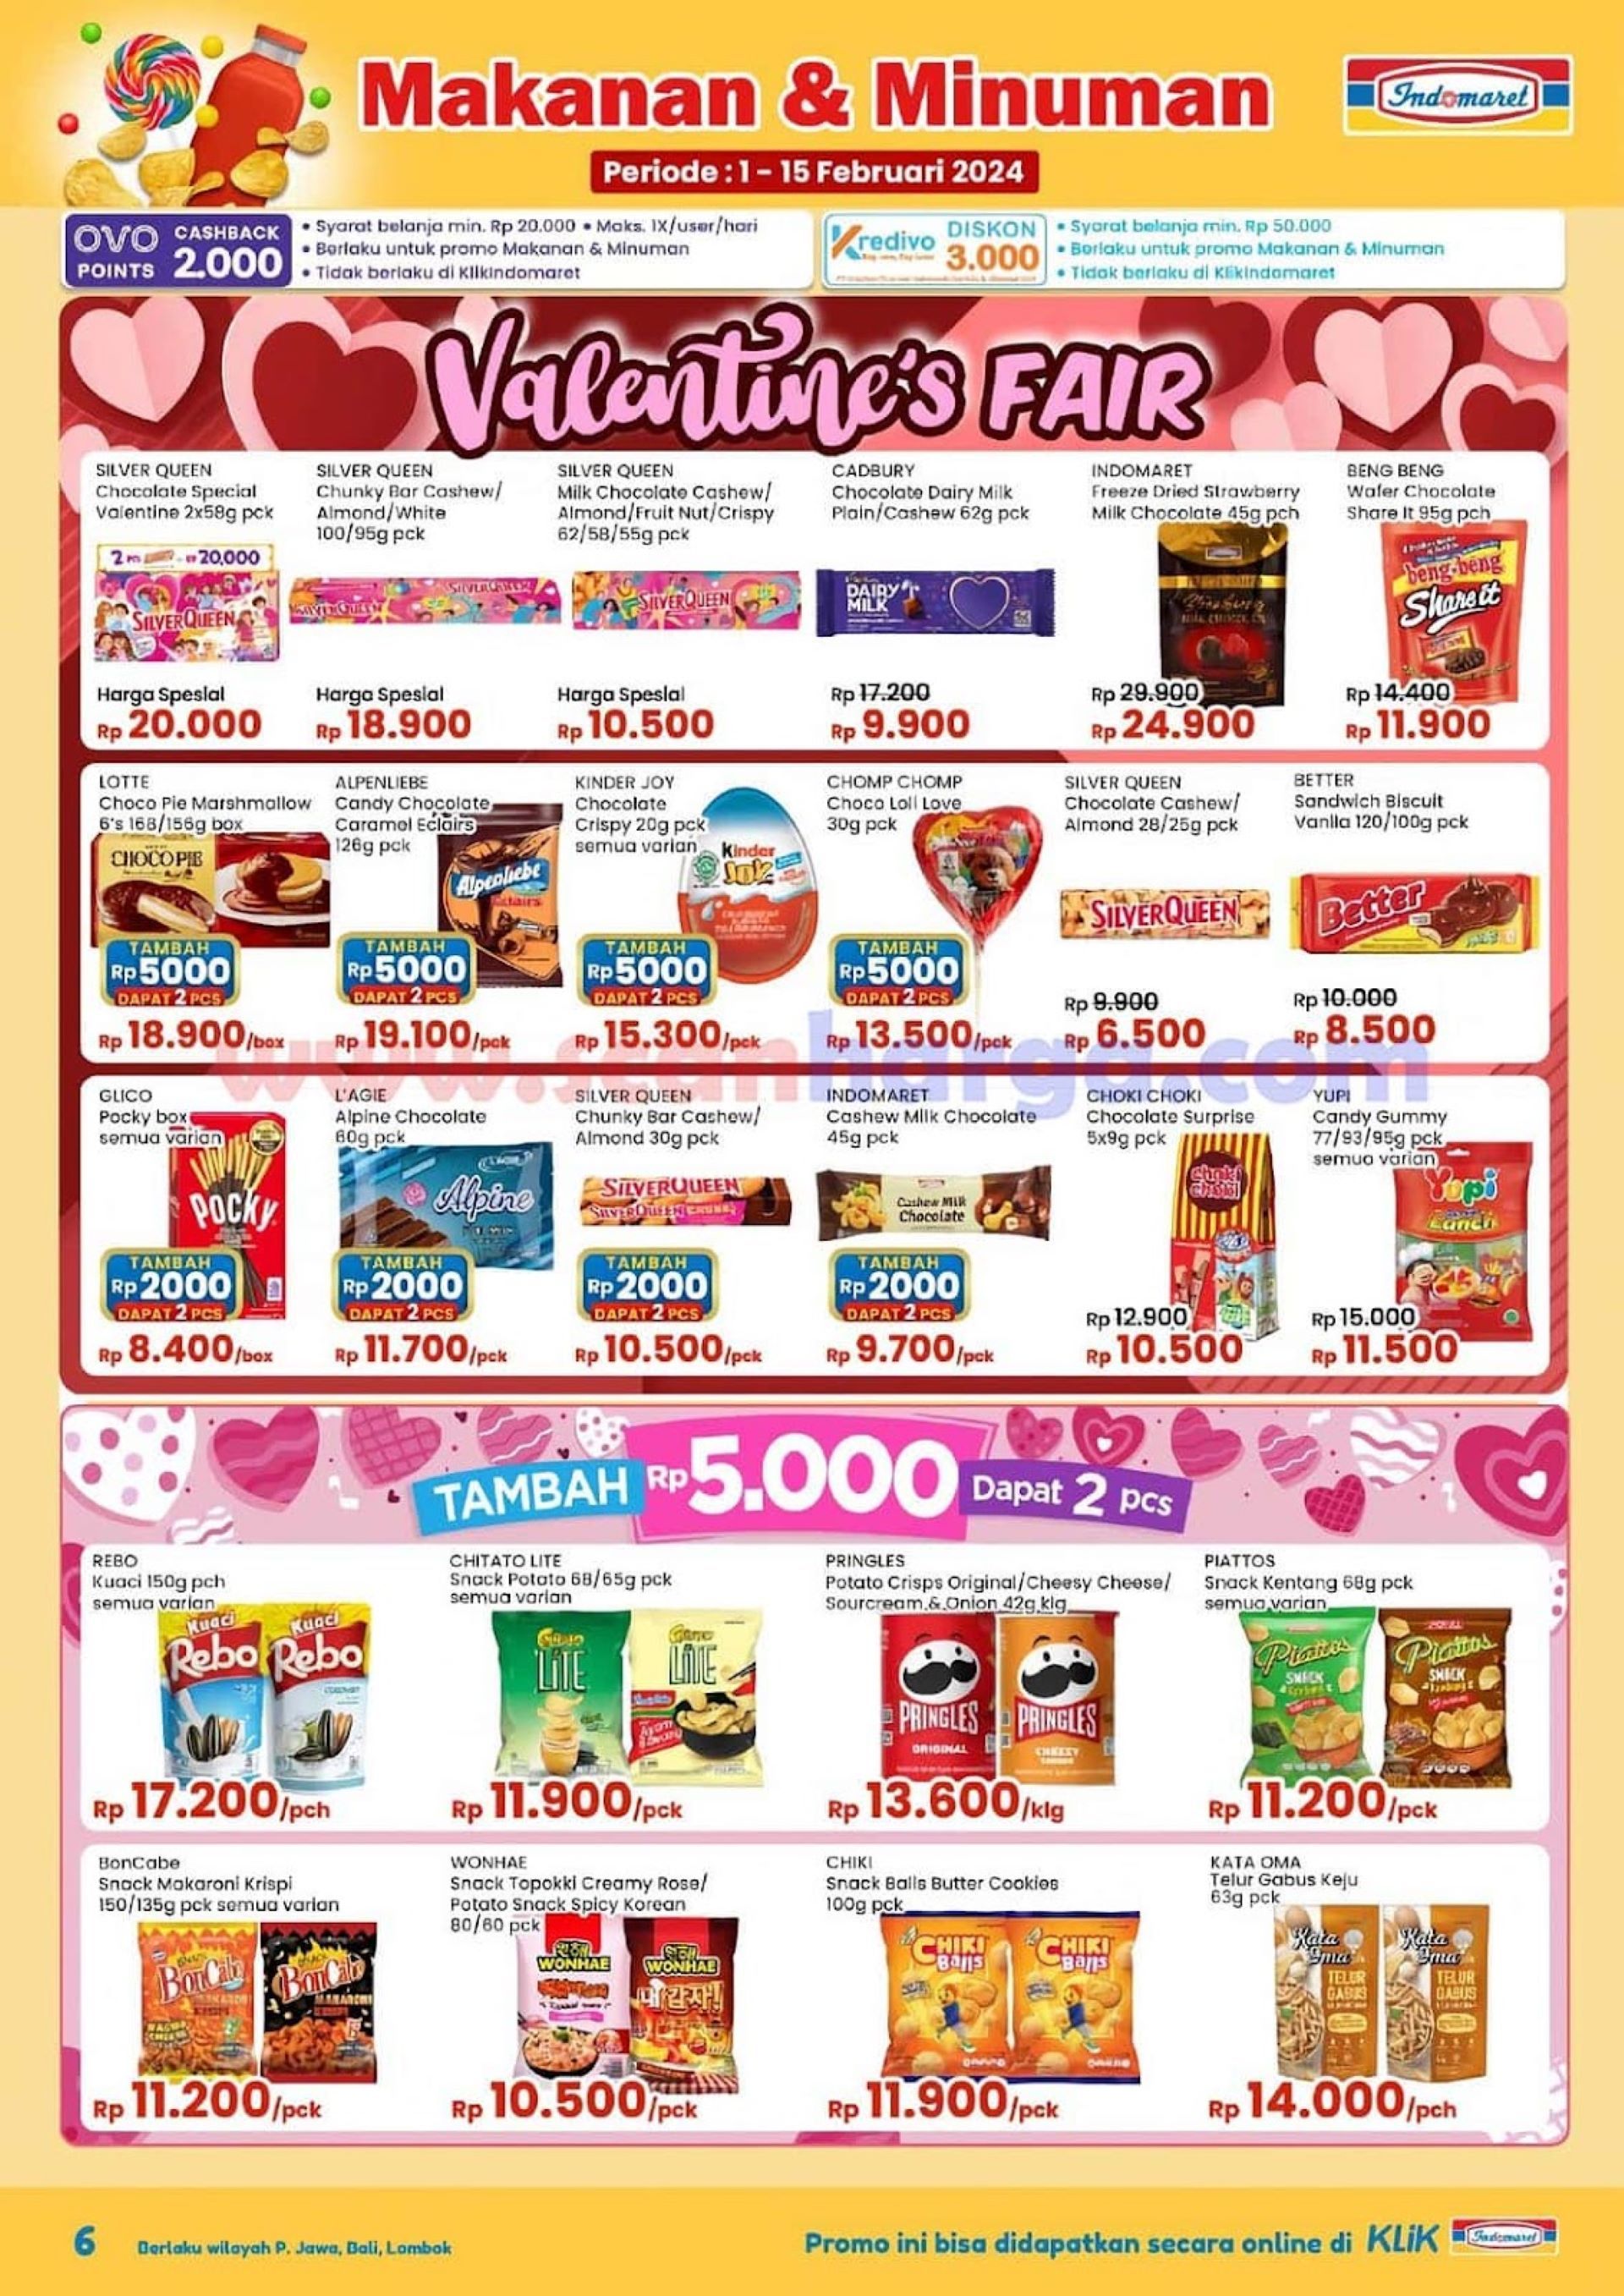 Daftar Katalog Harga Promo JSM Indomaret hari ini Valentine days